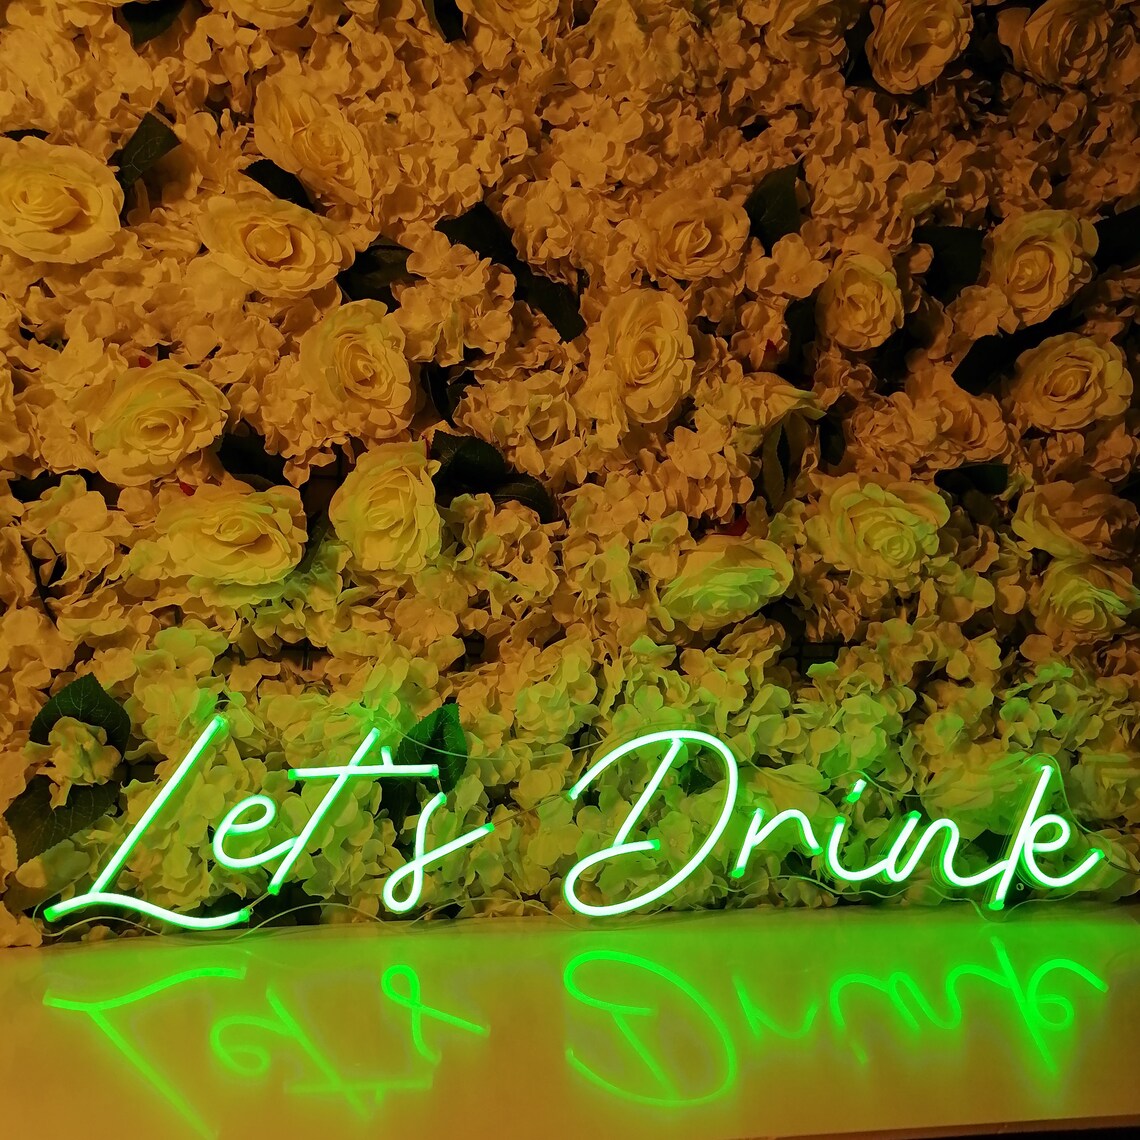 NEONIP-100% Handmade Let's Drink LED Neon Light Sign